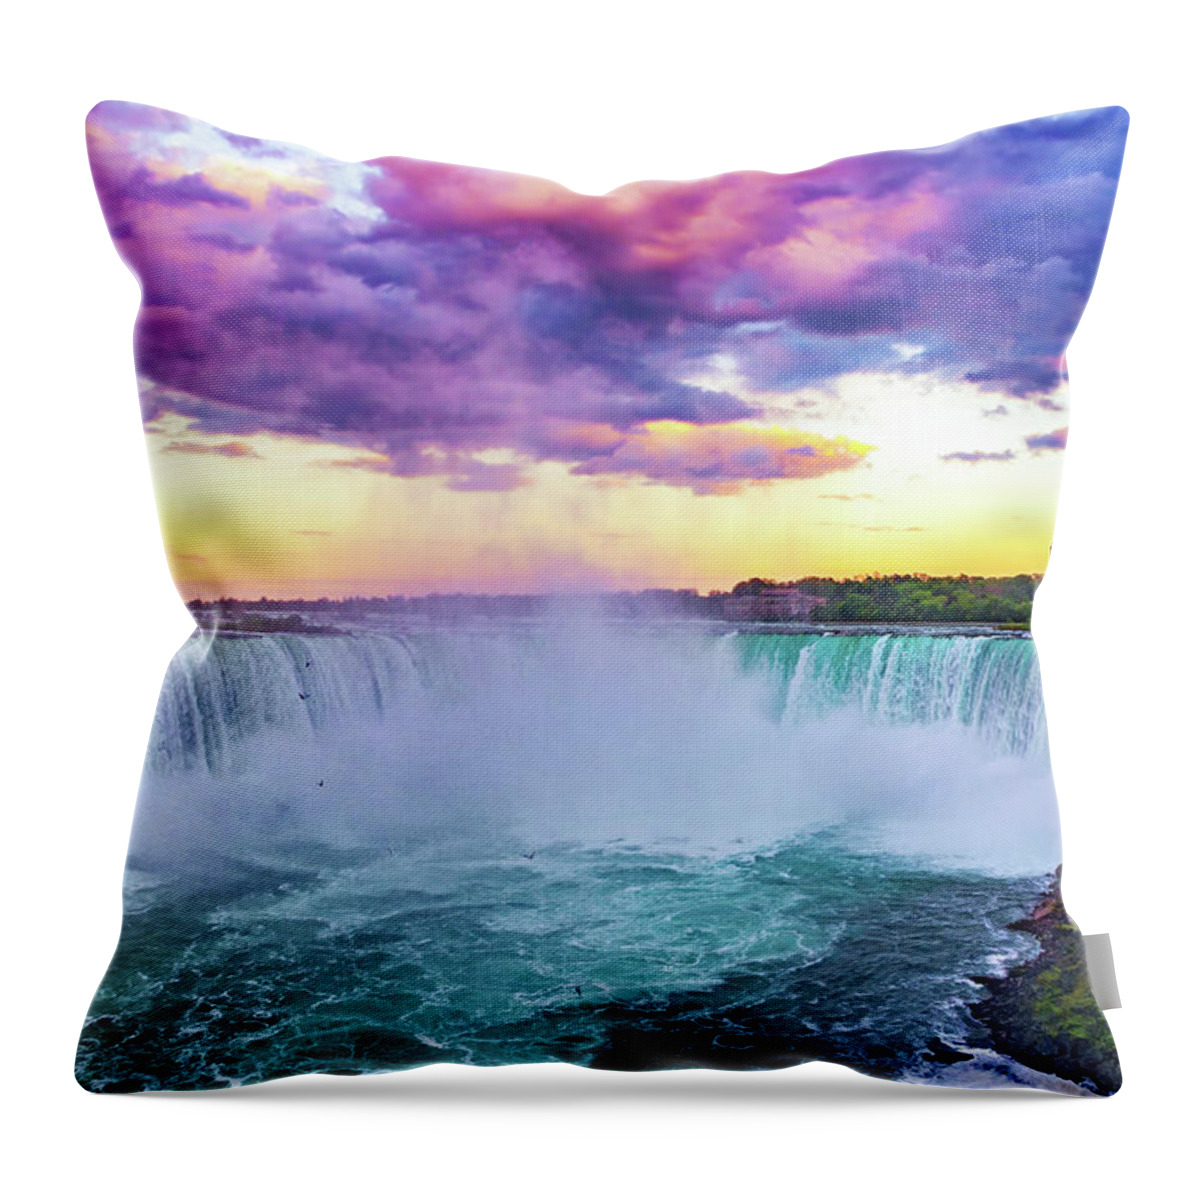 Niagara Falls Throw Pillow featuring the photograph Niagara Falls Evening 3 by Steve Harrington